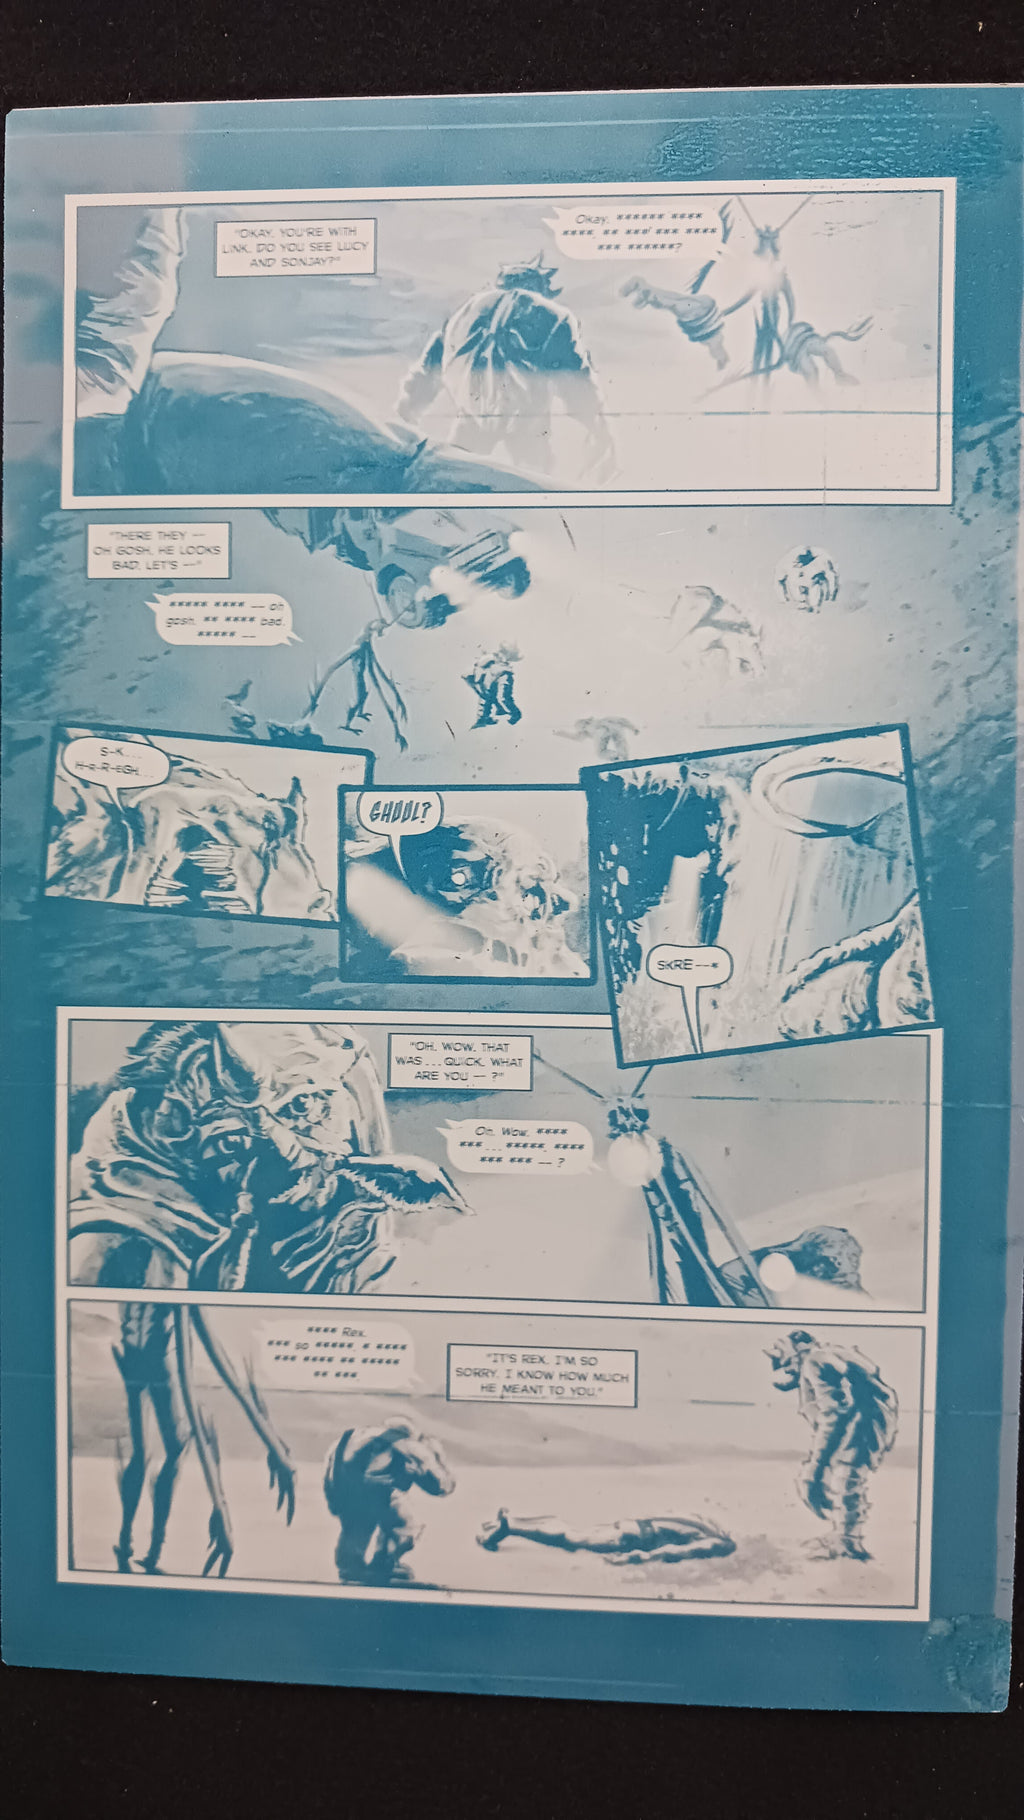 Behemoth #4 - Page 9  - PRESSWORKS - Comic Art - Printer Plate - Cyan